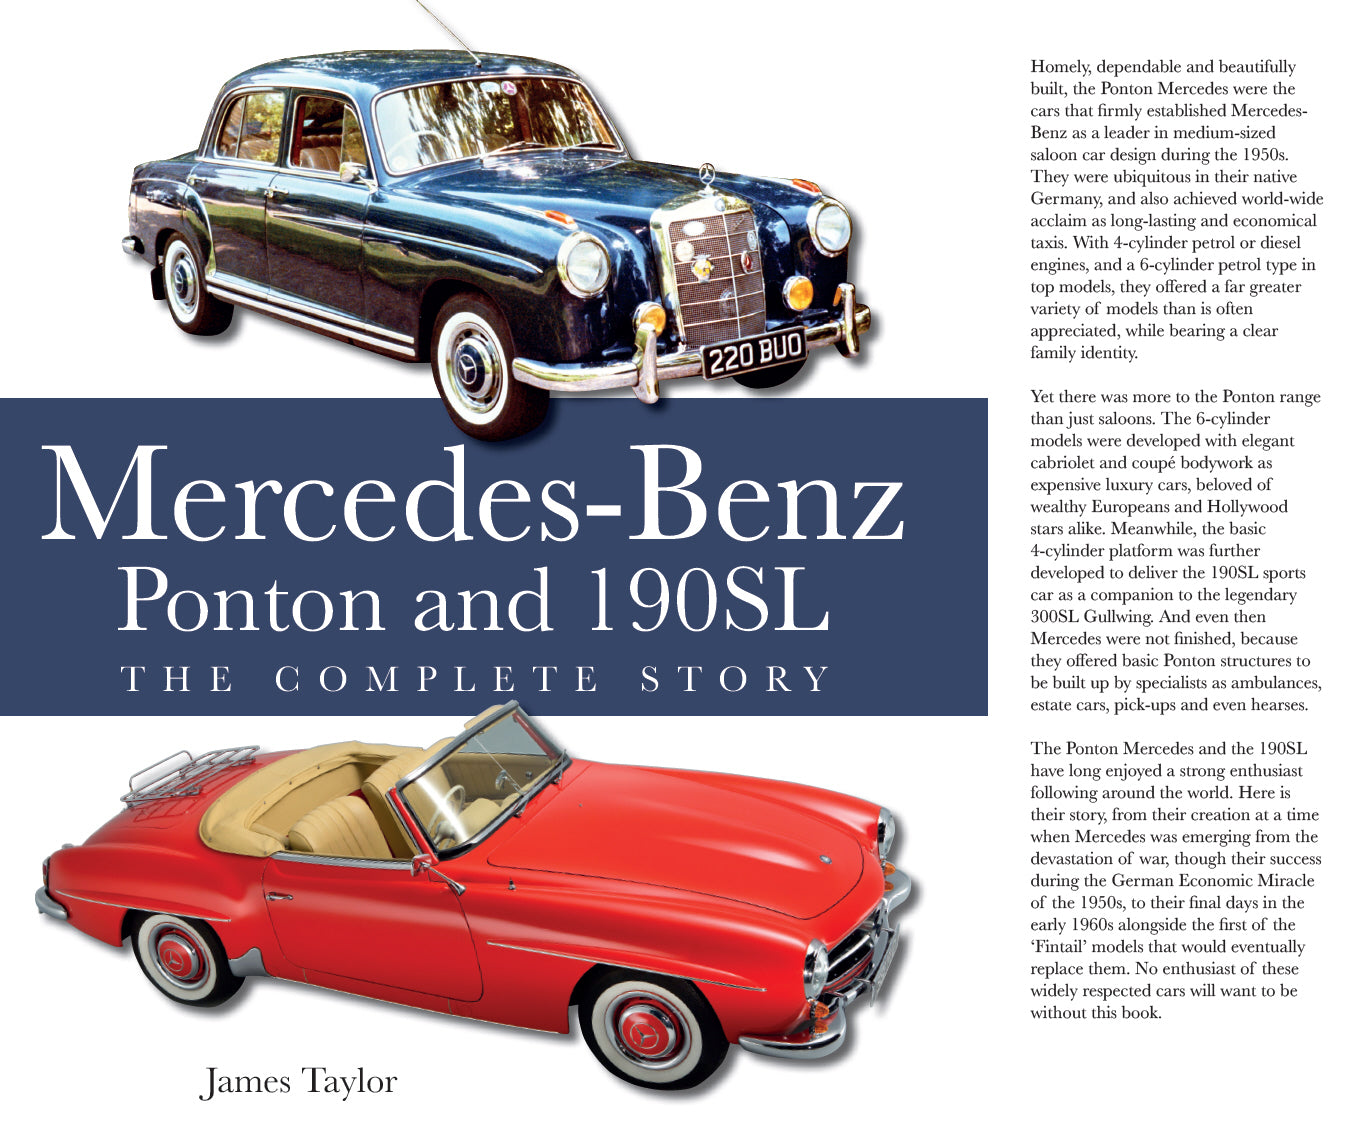 The Mercedes-Benz Ponton and 190SL